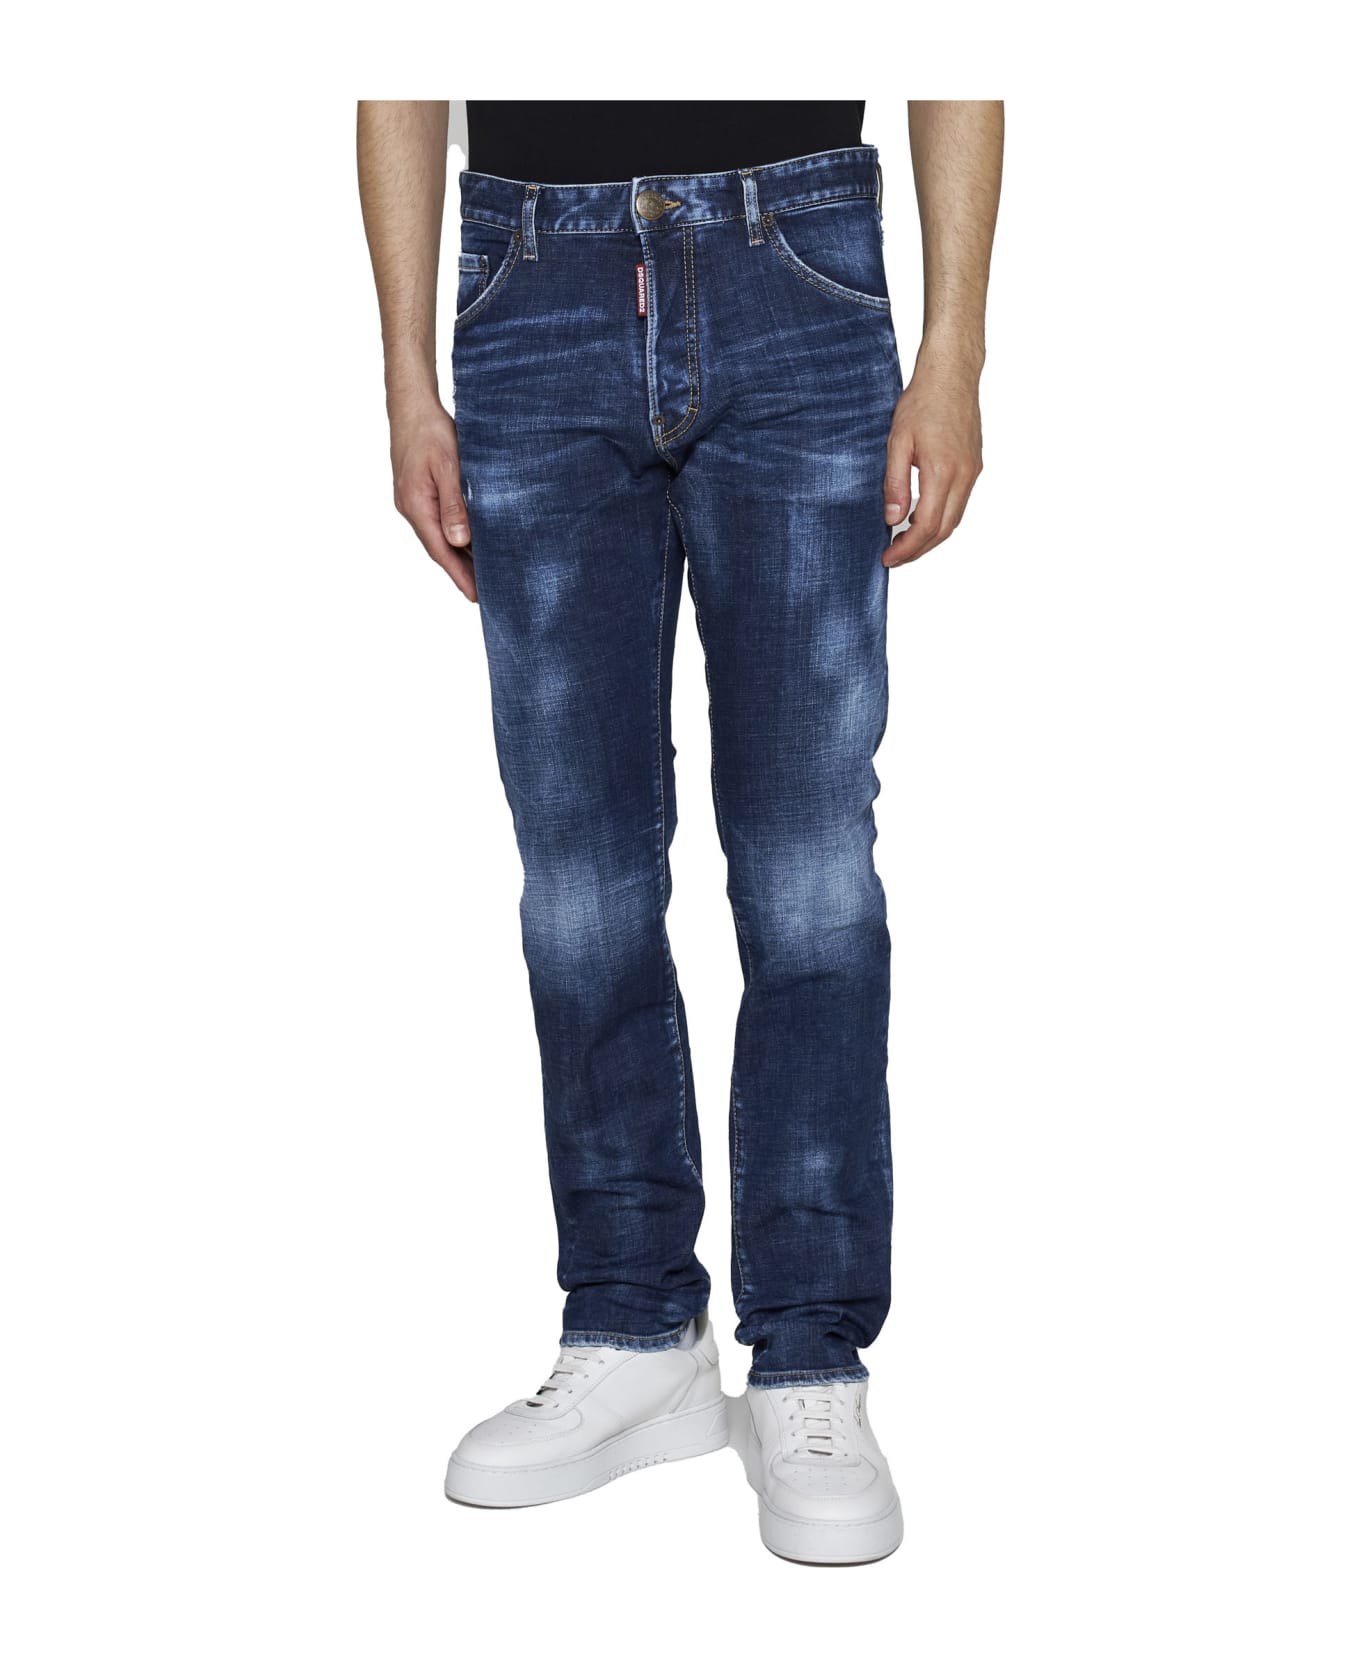 Dsquared2 Cool Guy Jeans - Denim